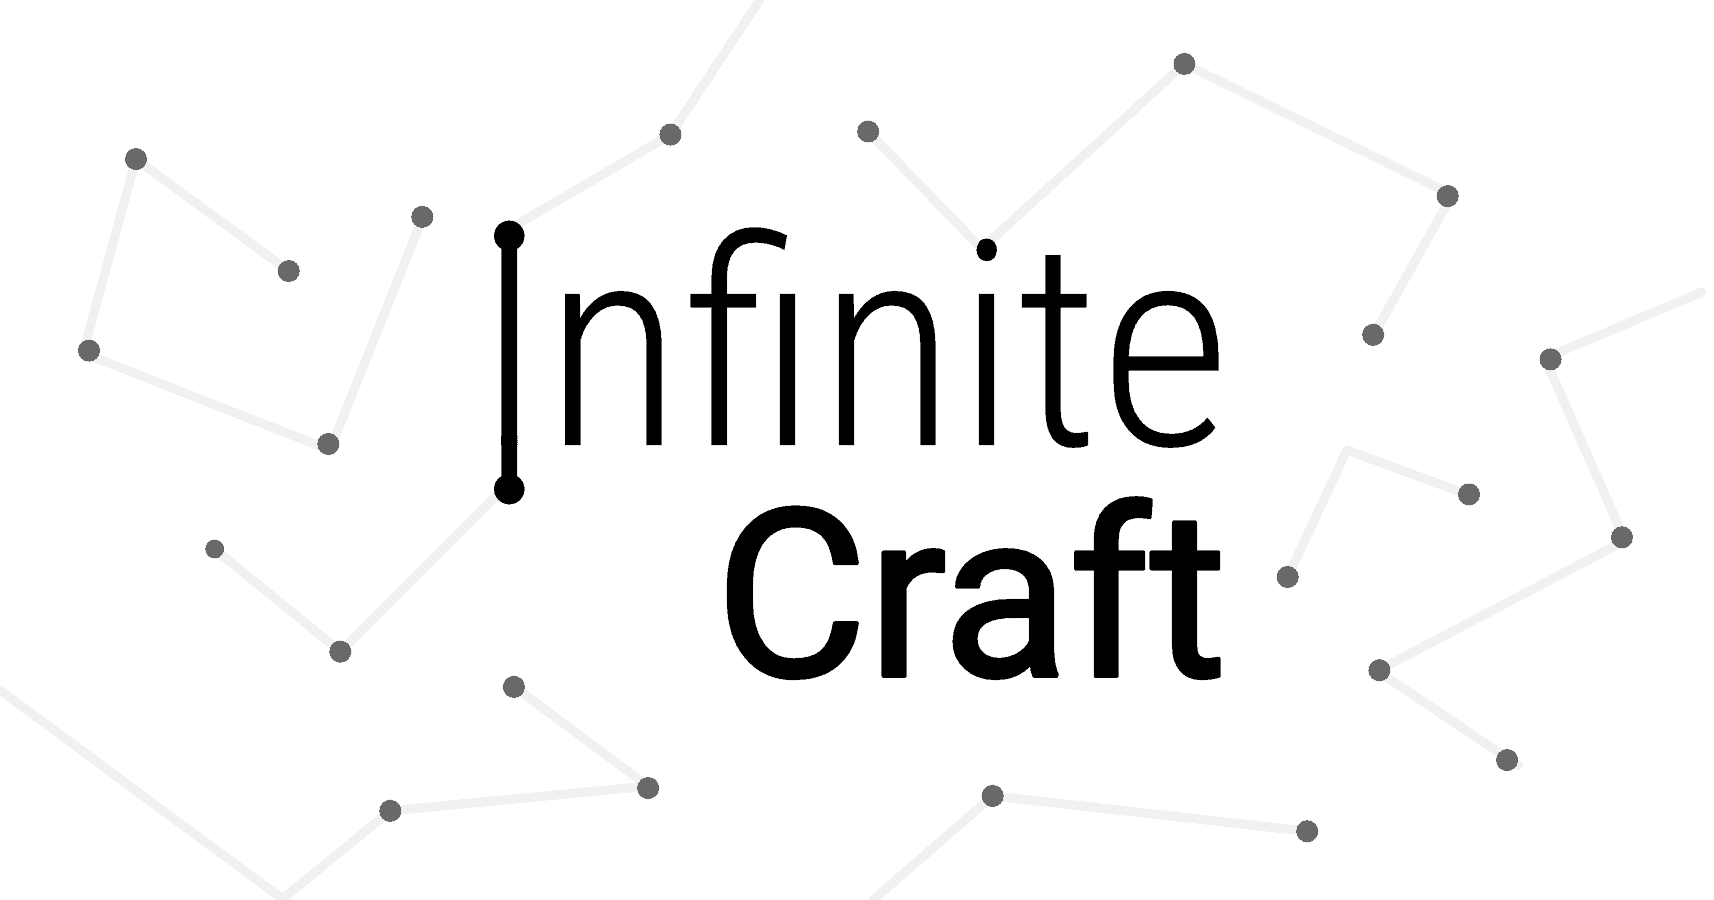 Infinite Craft cover art.